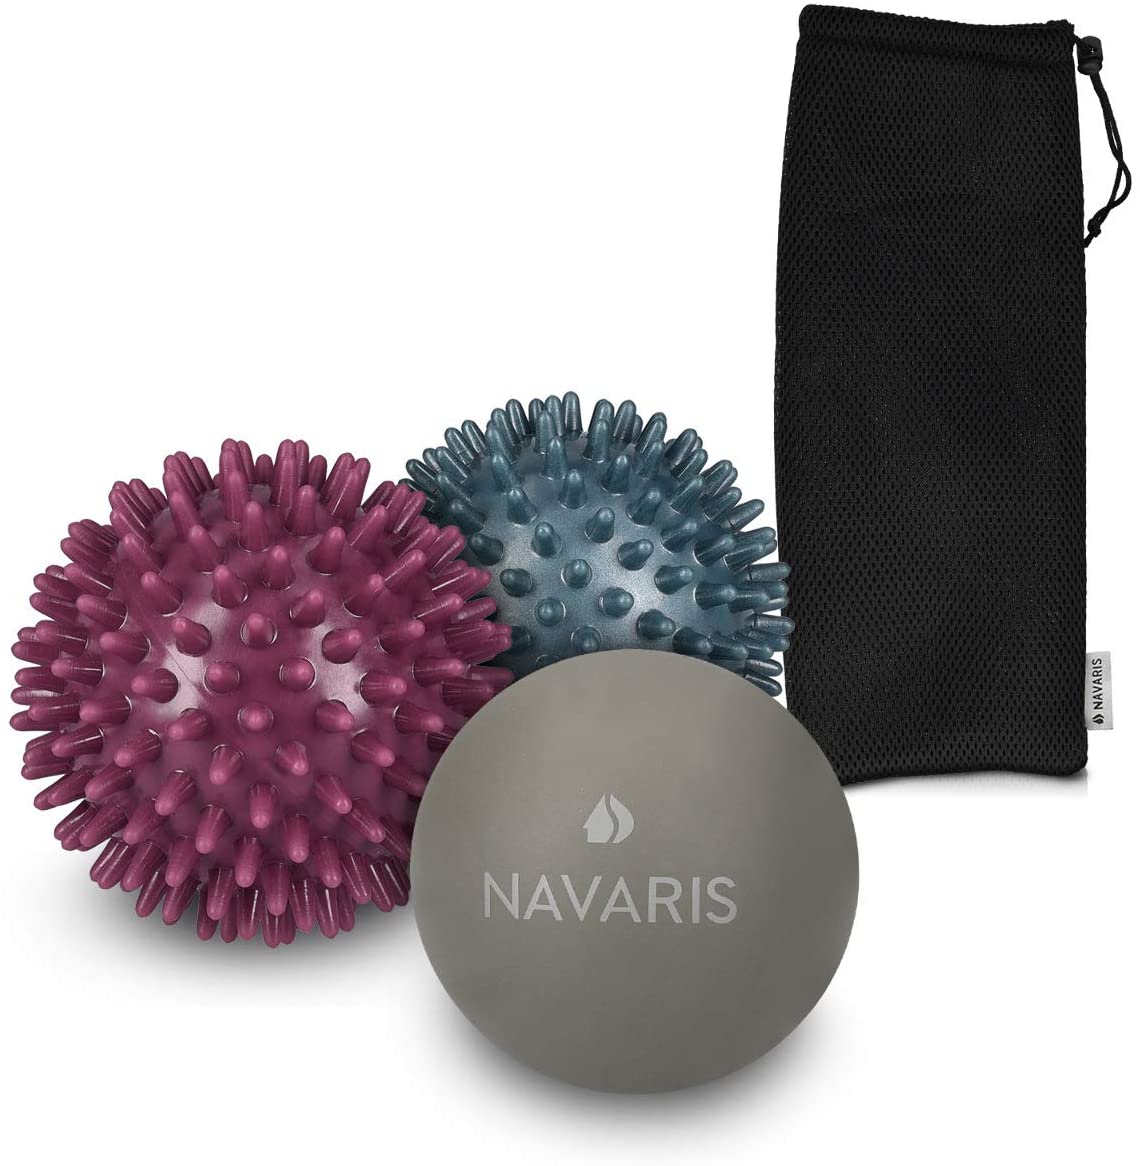 Navaris Massage balls 3 balls with two massage balls for back, legs and feet